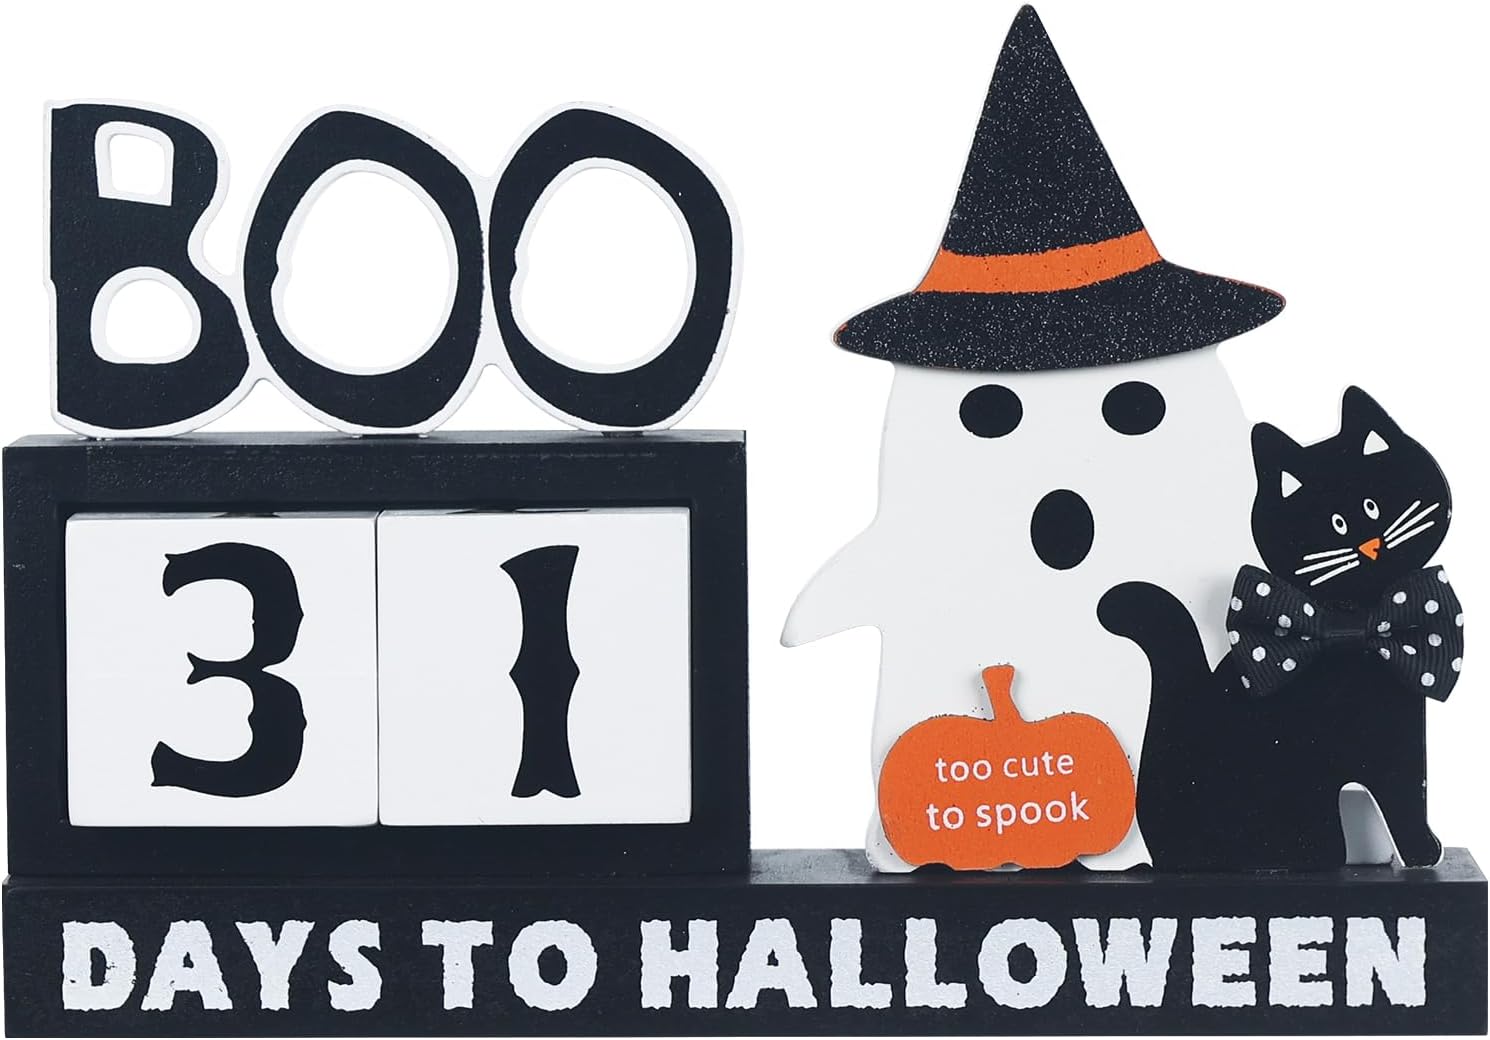 A calendar with Halloween decorations